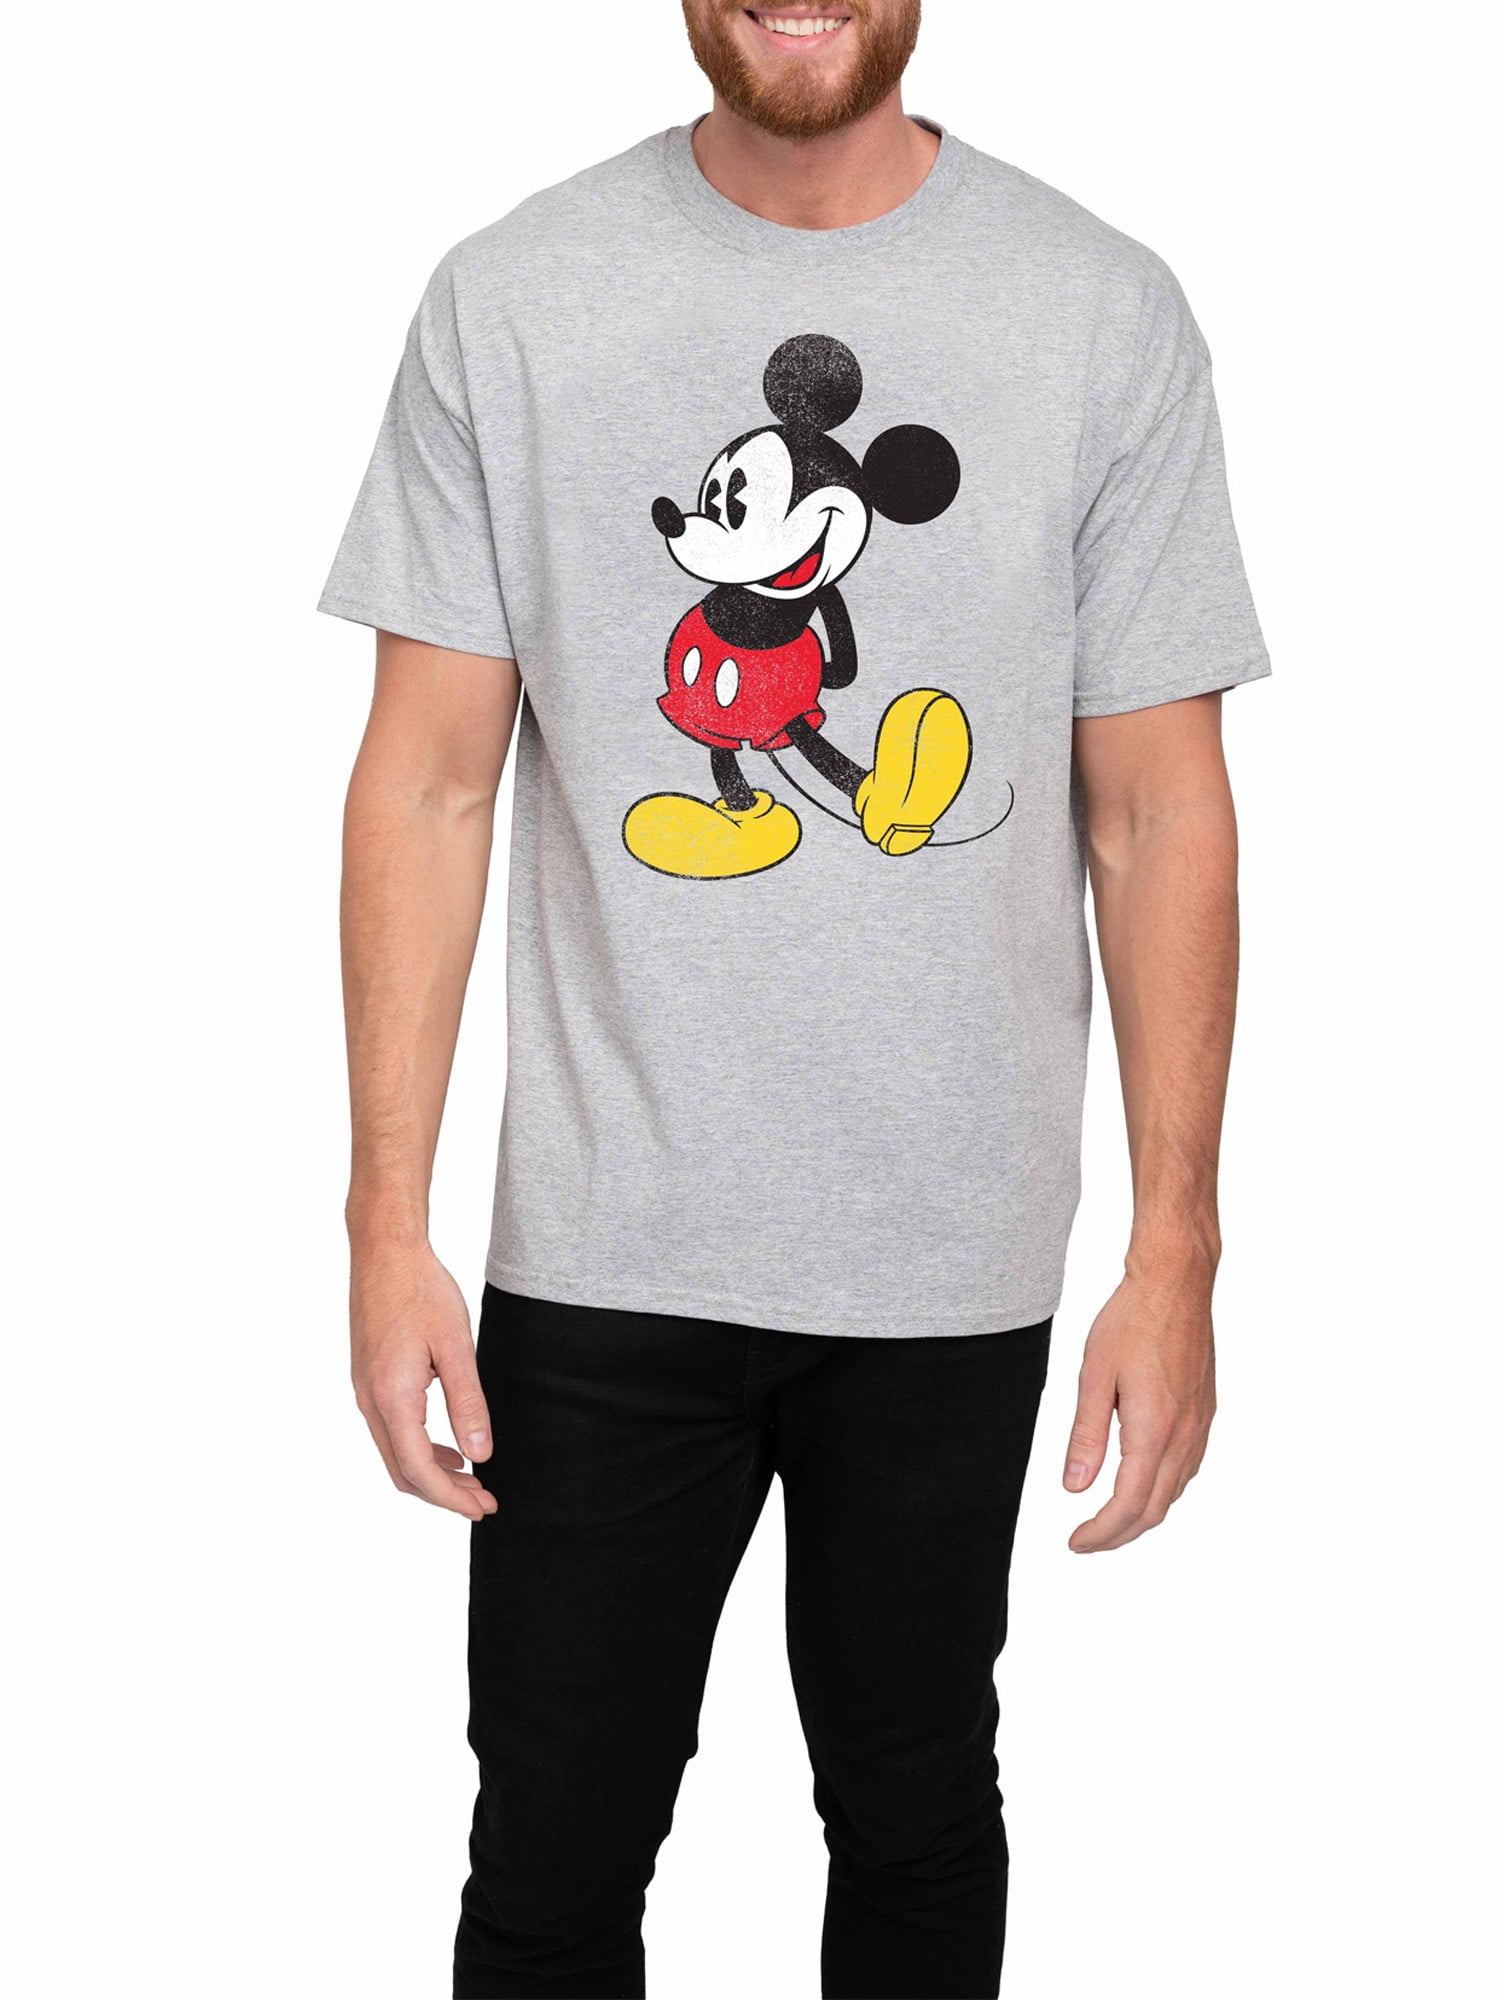 Mickey Mouse Classic Kick Adults Unisex Grey Sweatshirt 